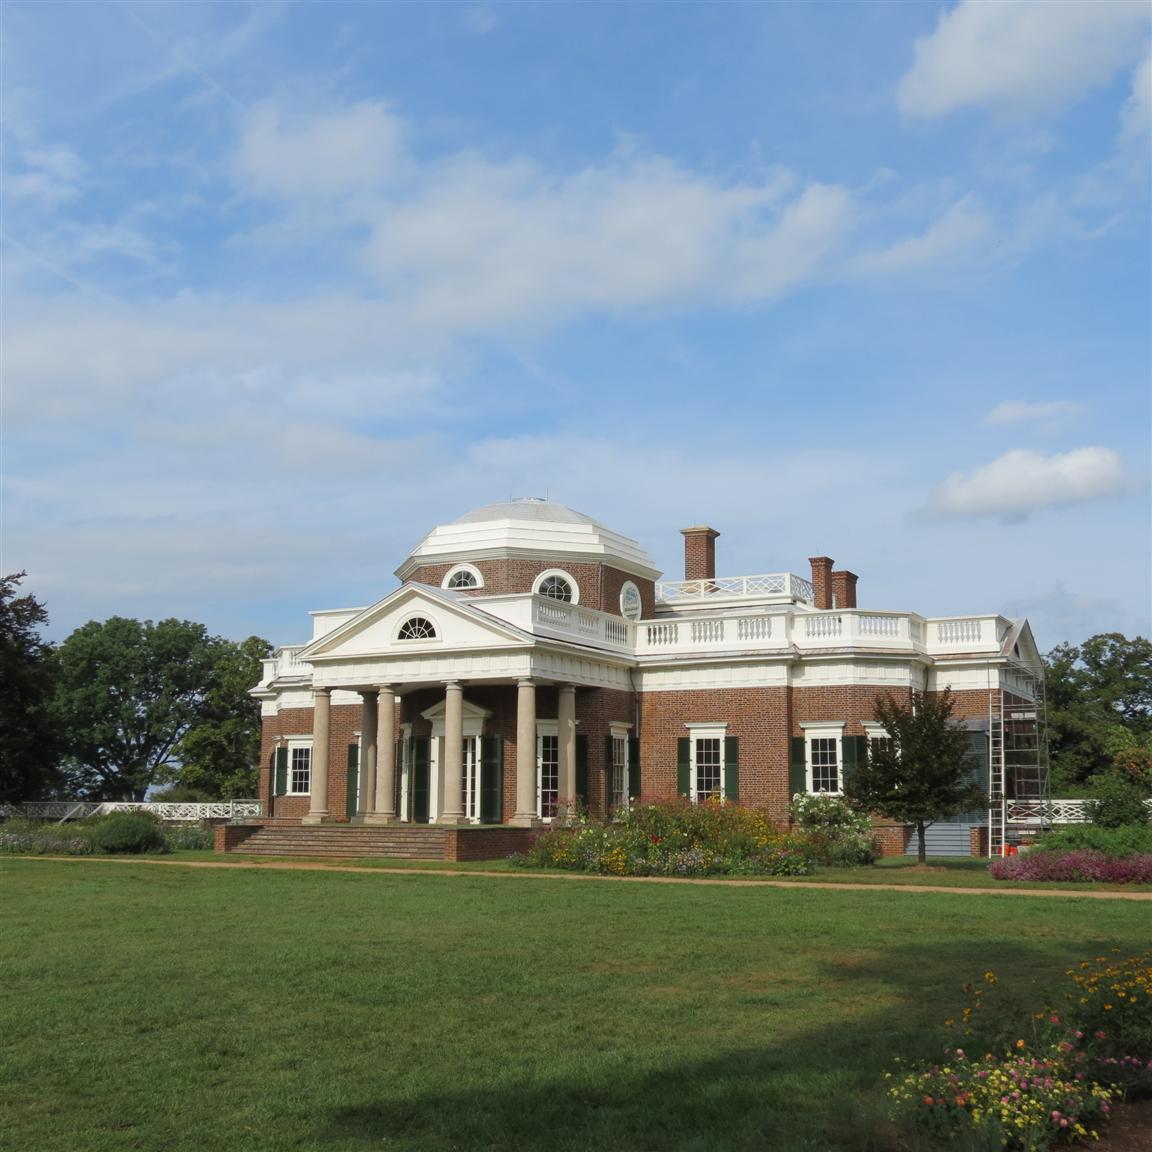 Monticello home of Thomas Jefferson near Charlottesville, Virginia